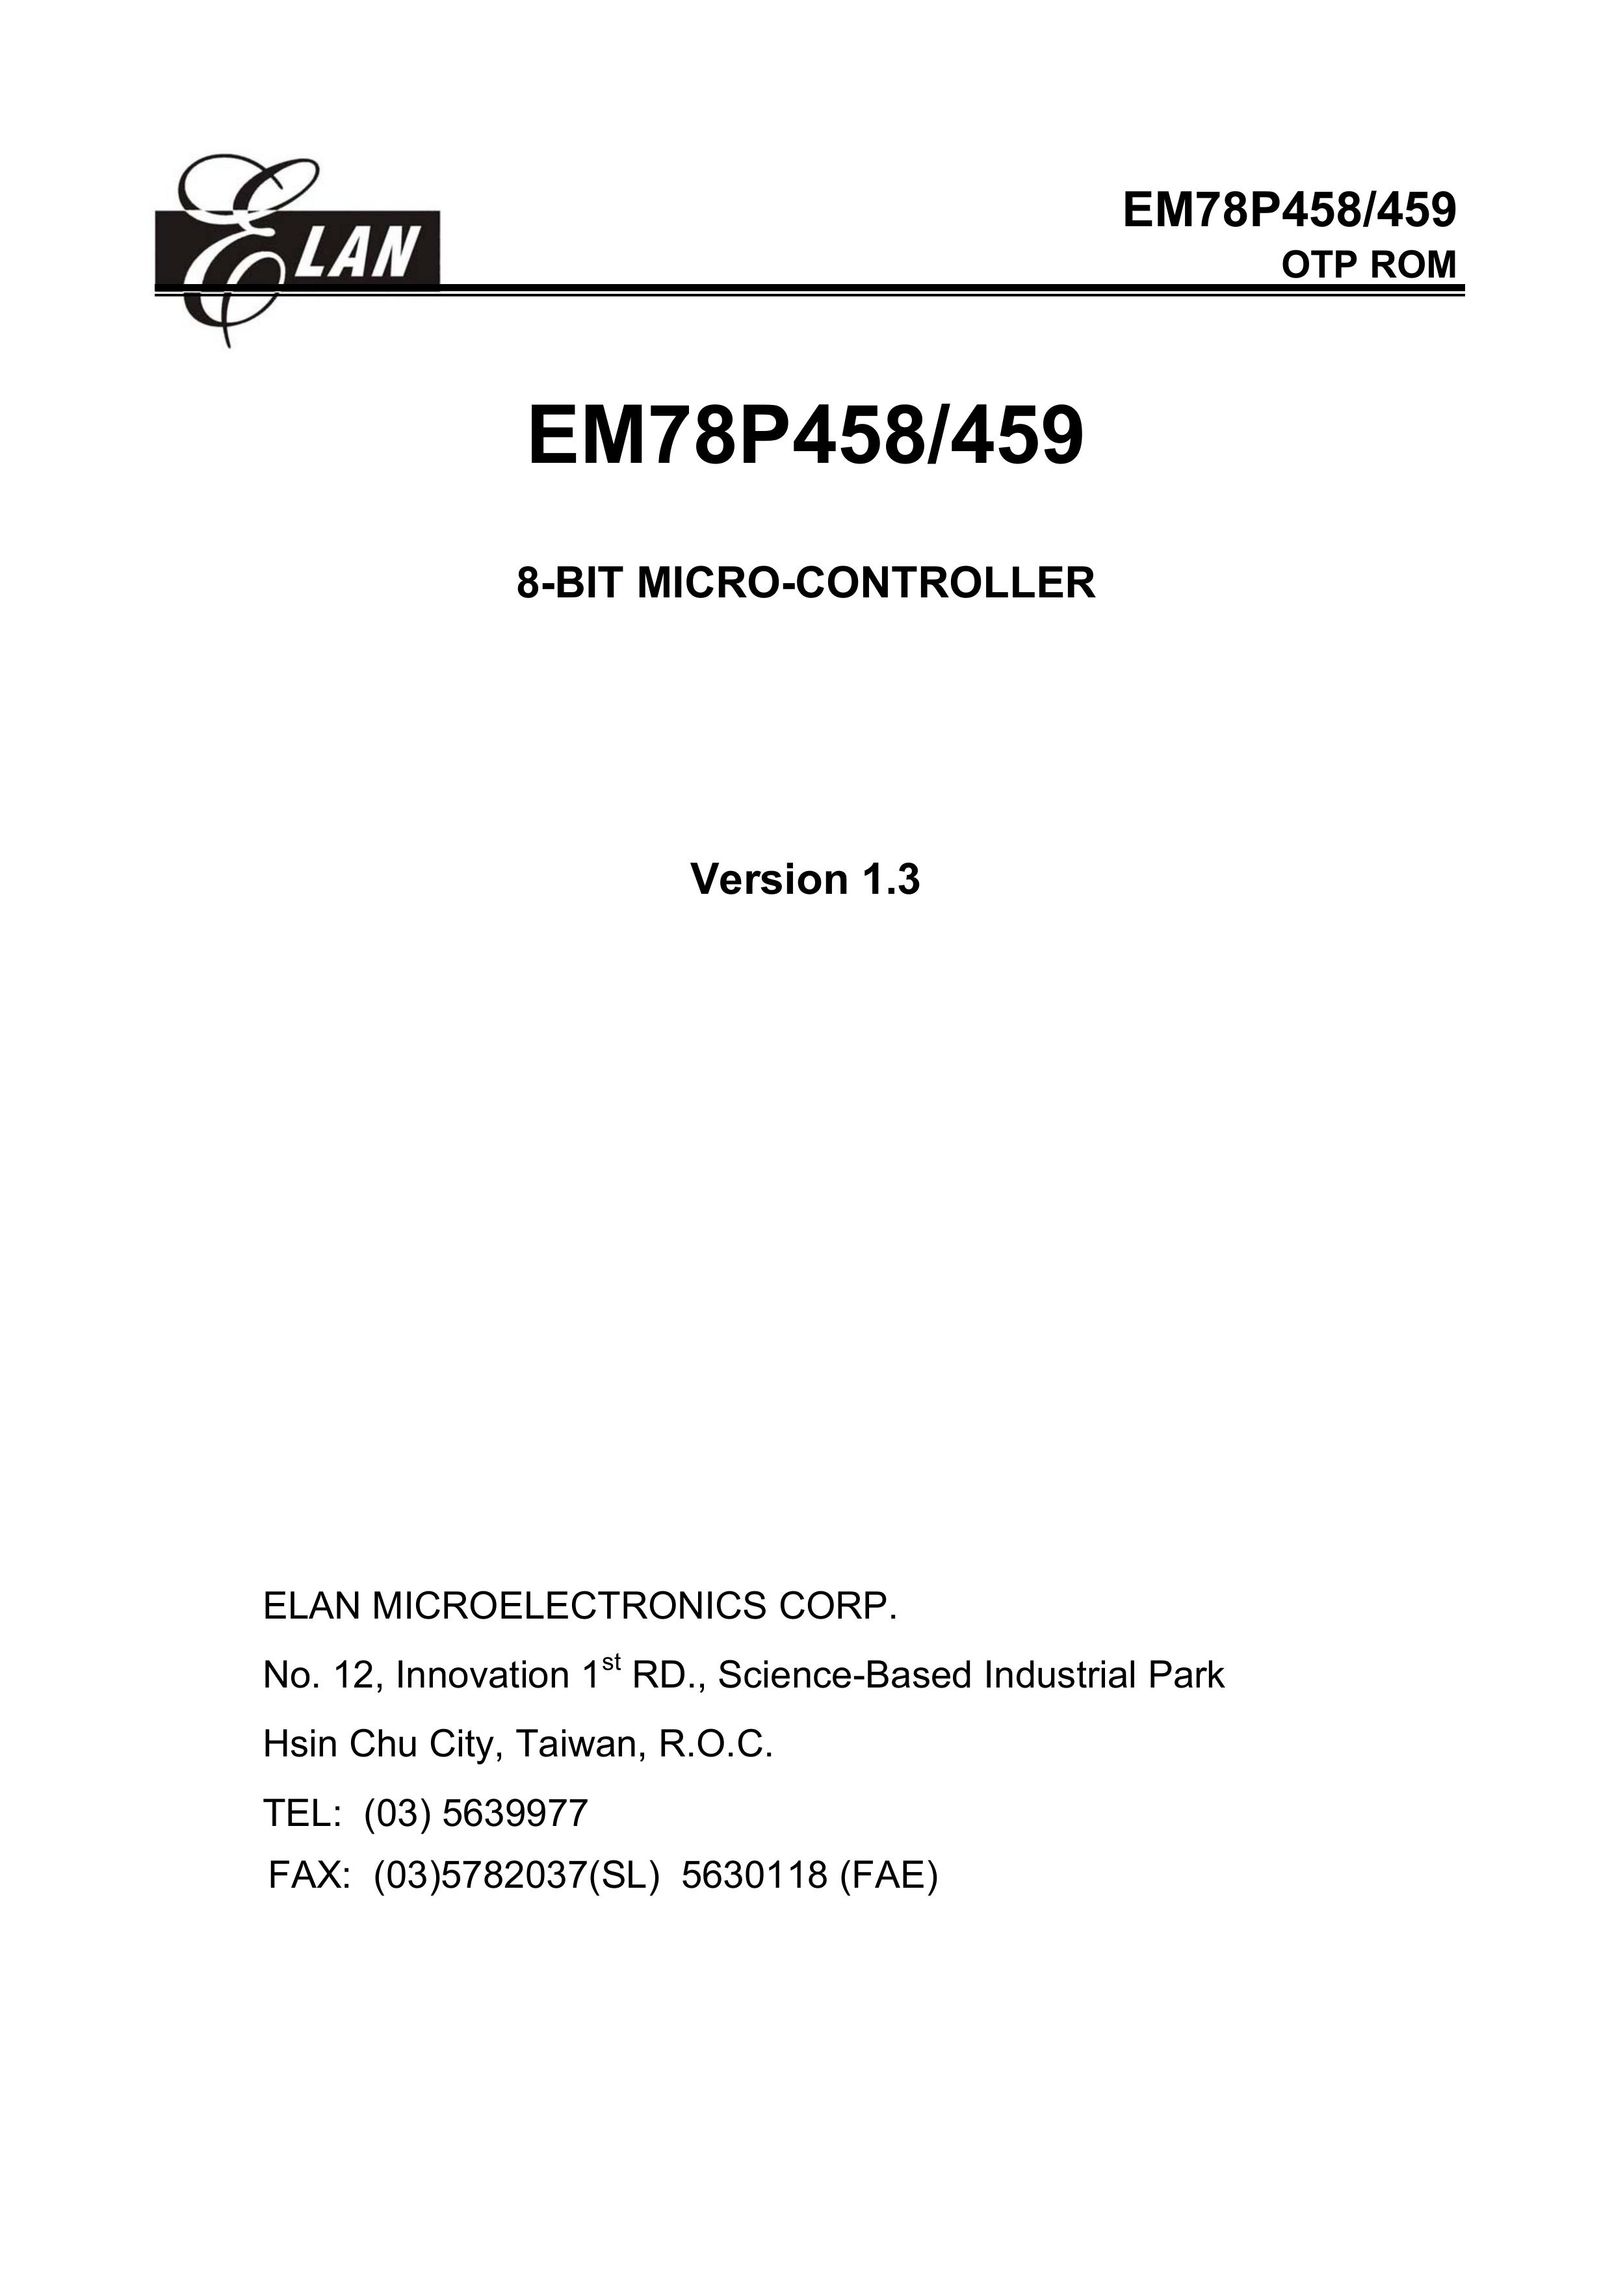 ELAN Home Systems EM78P459AK Network Card User Manual